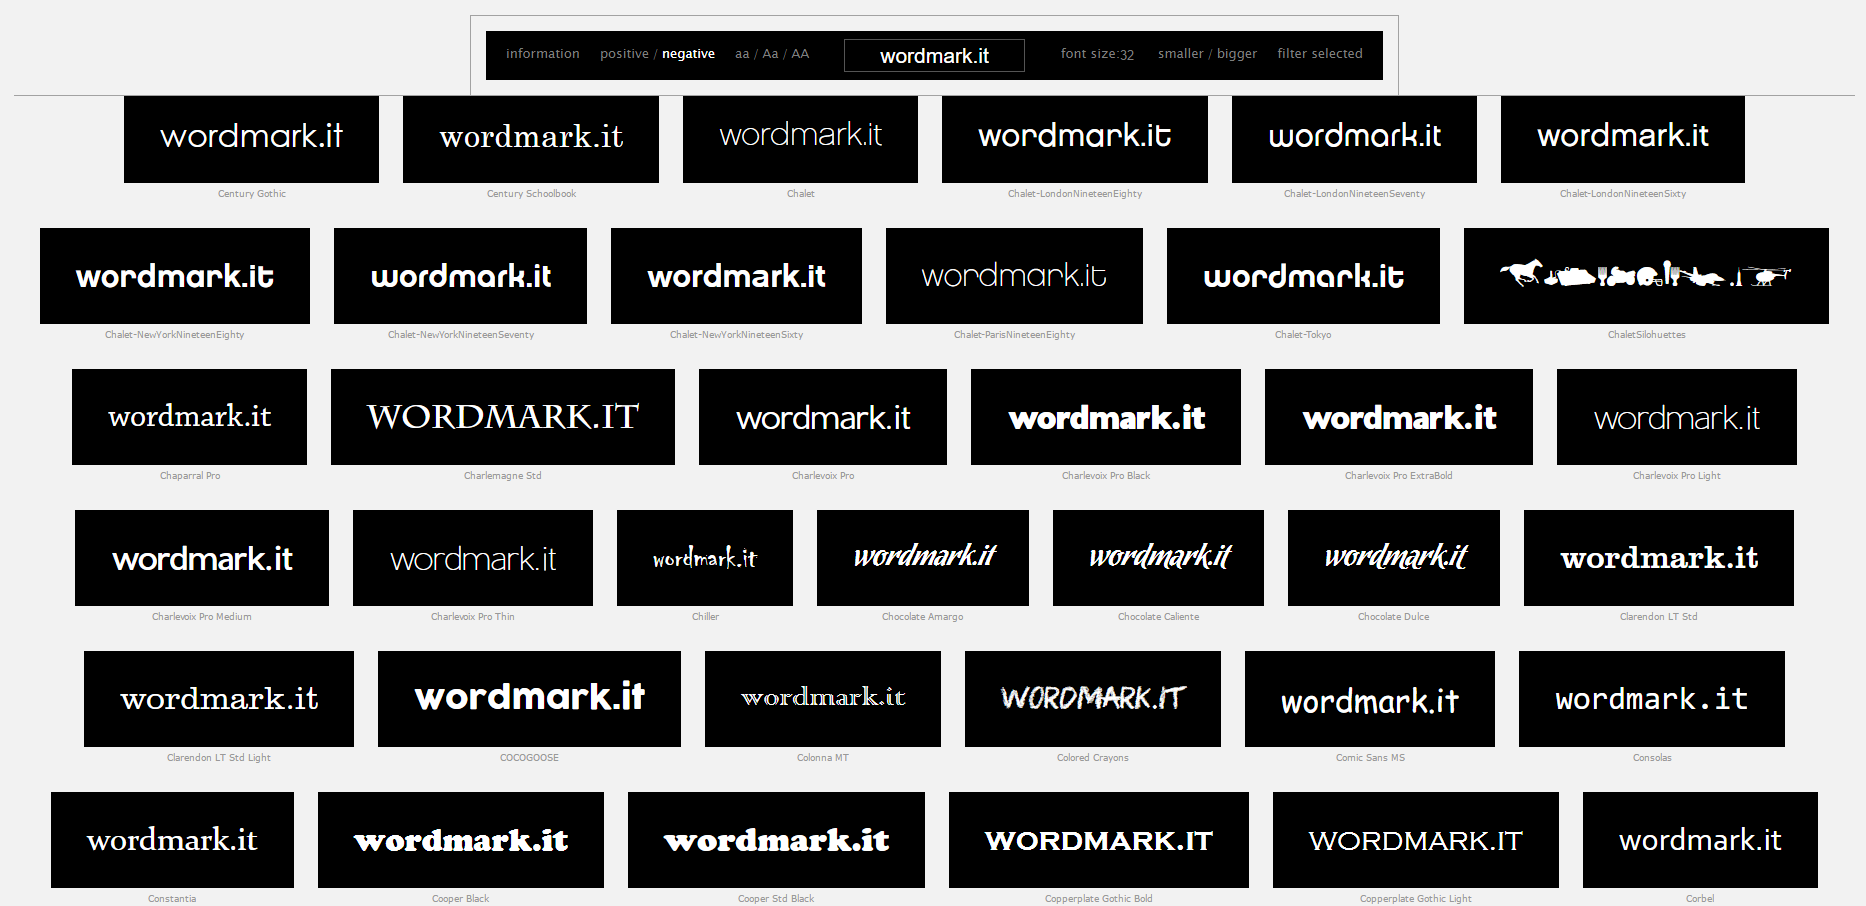 wordmark.it - helps you choose fonts